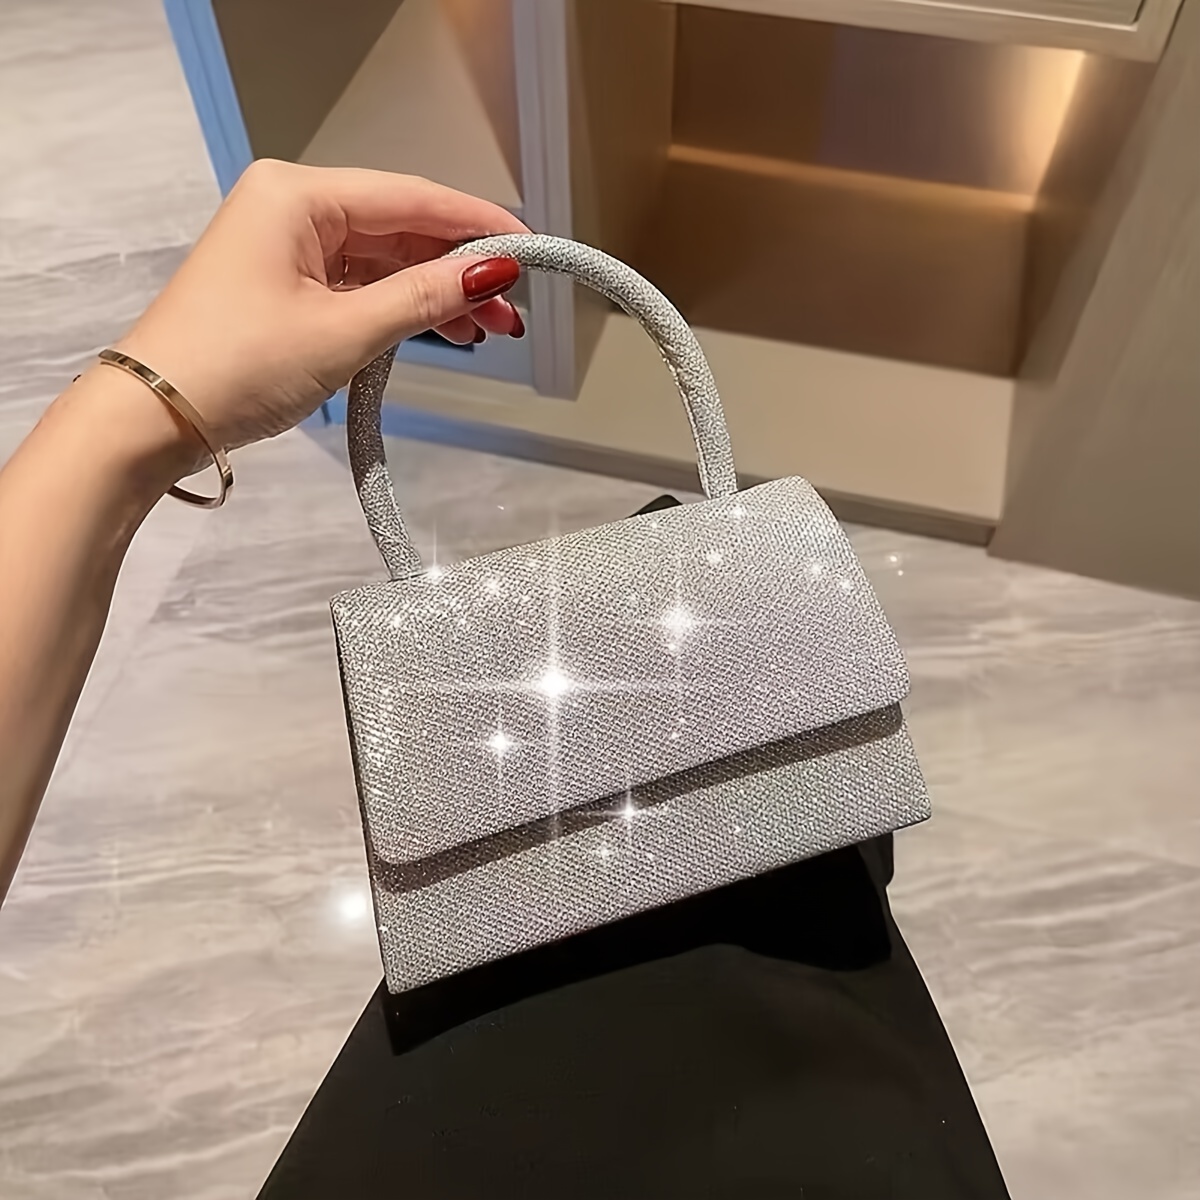 Mini Silver Top Handle Glitter Evening Bag, Chain Shoulder Bag